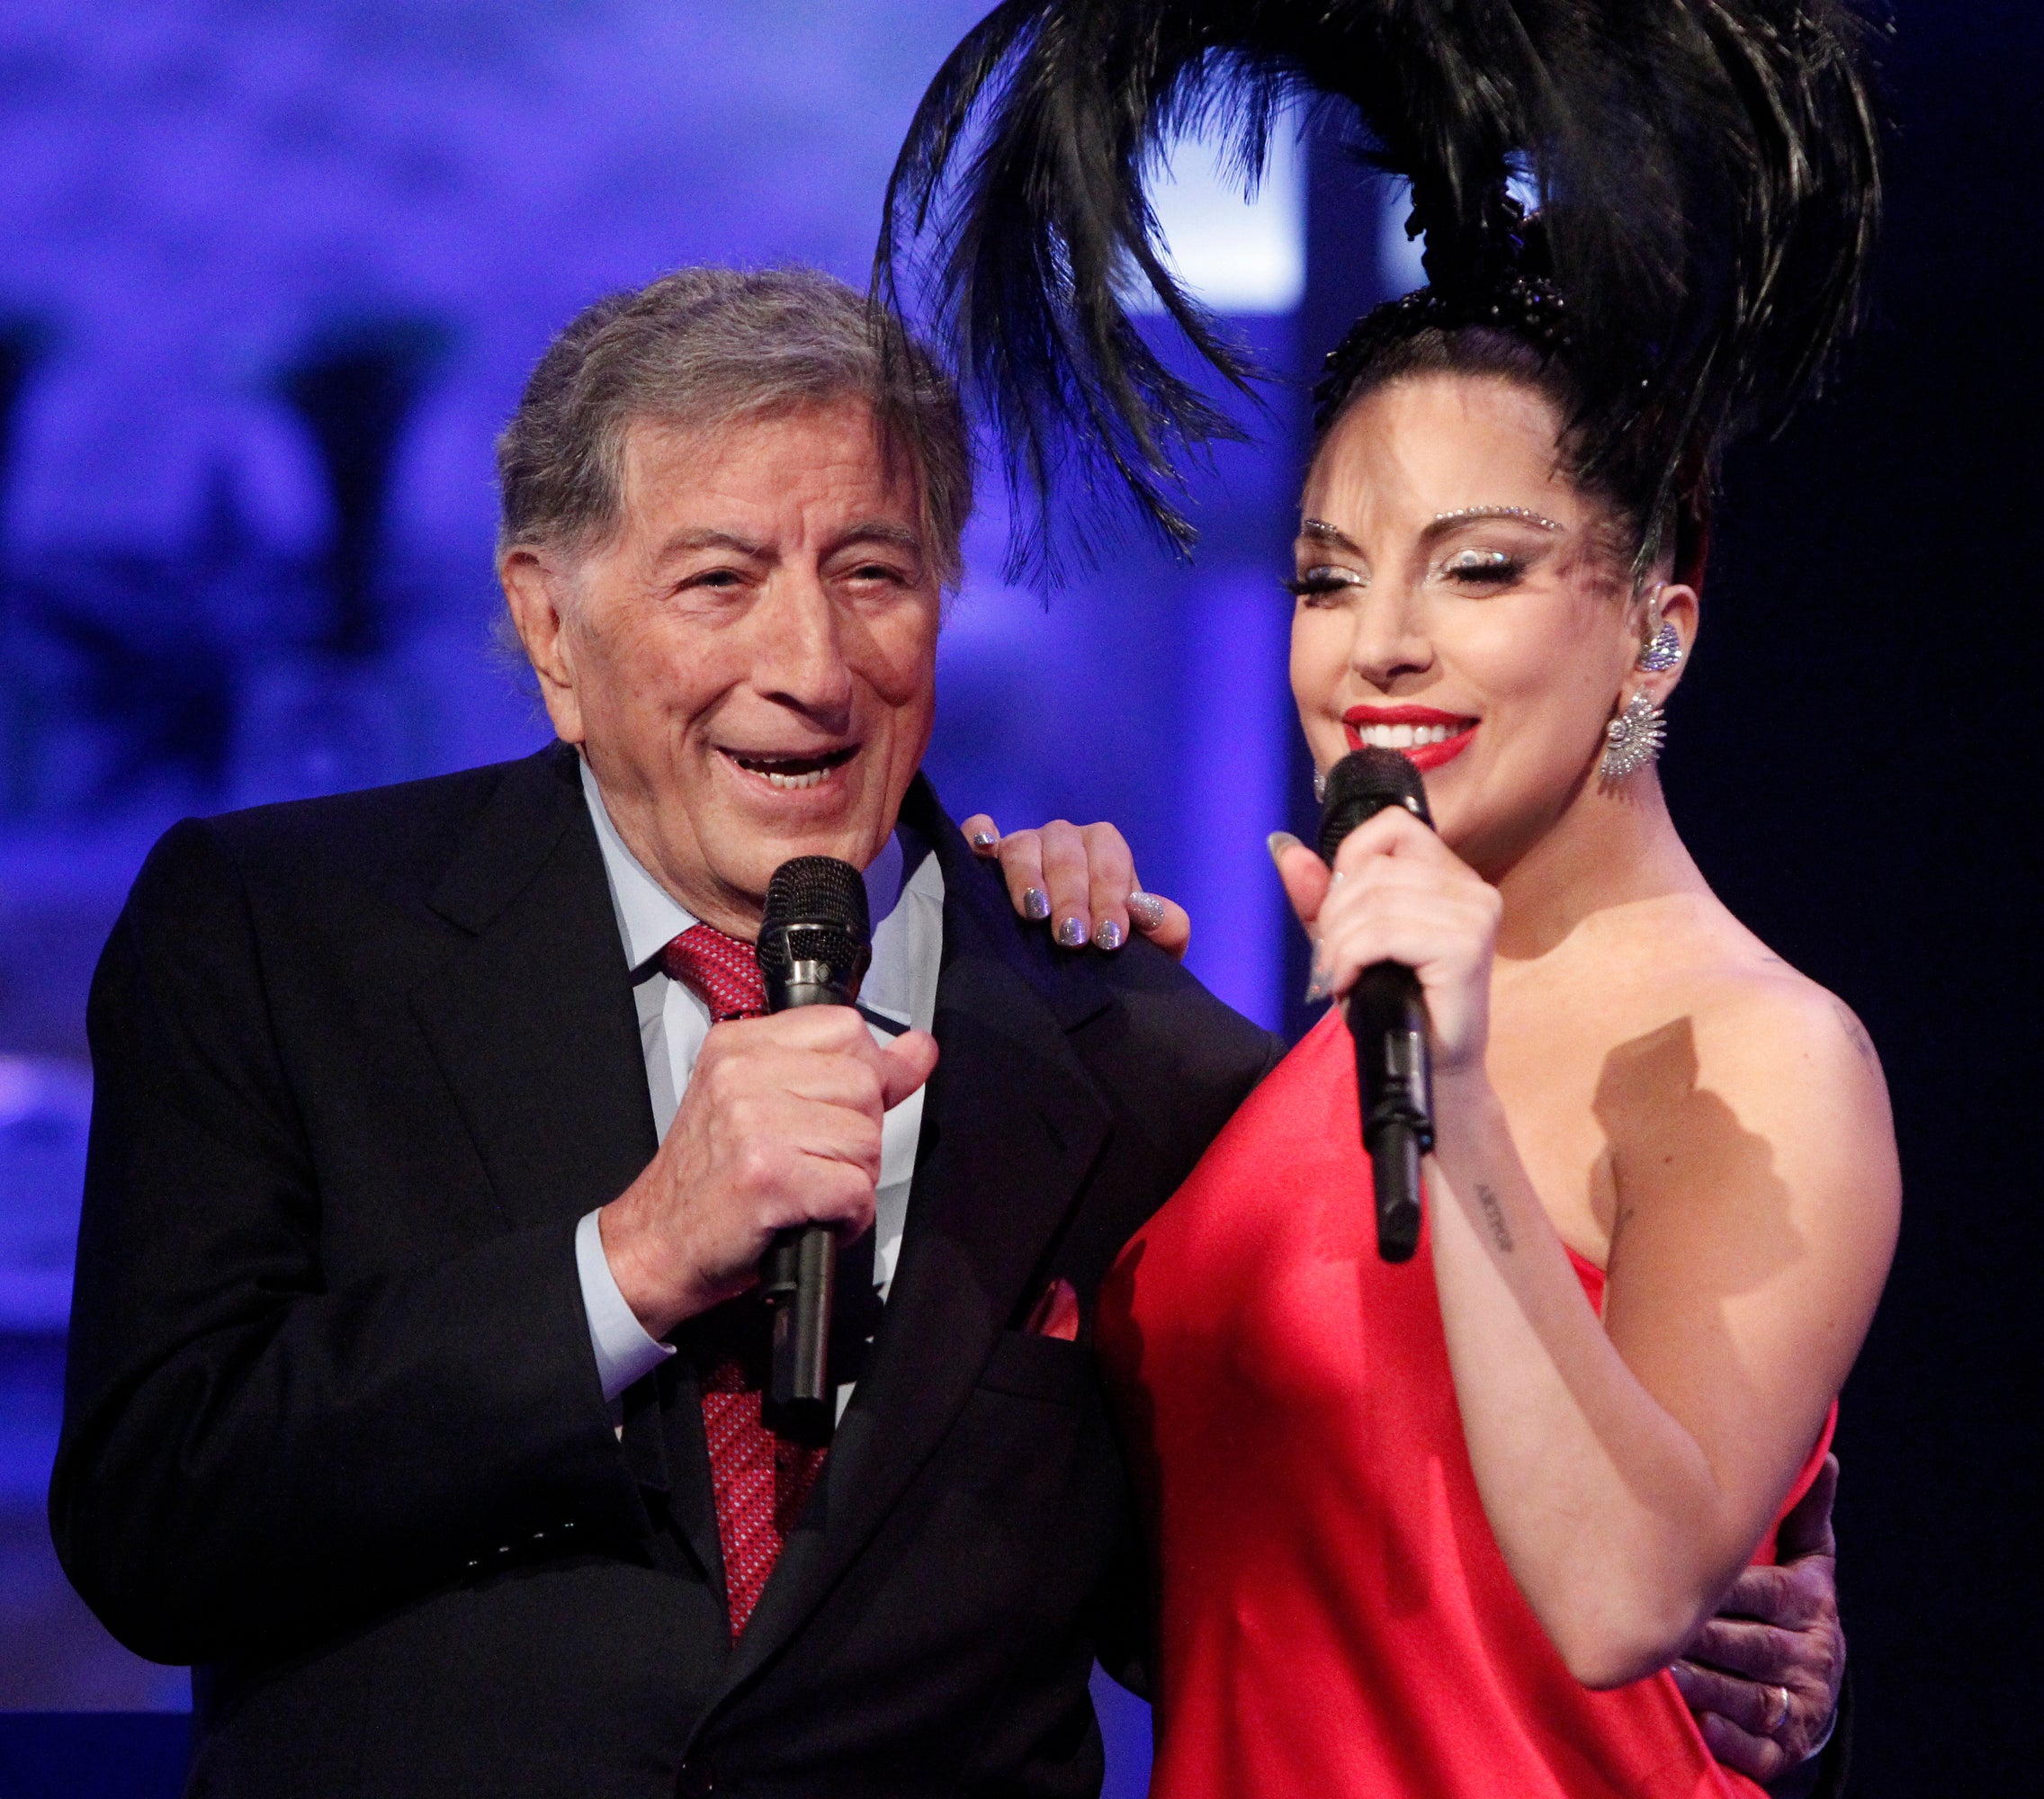 Tony and Gaga singing onstage